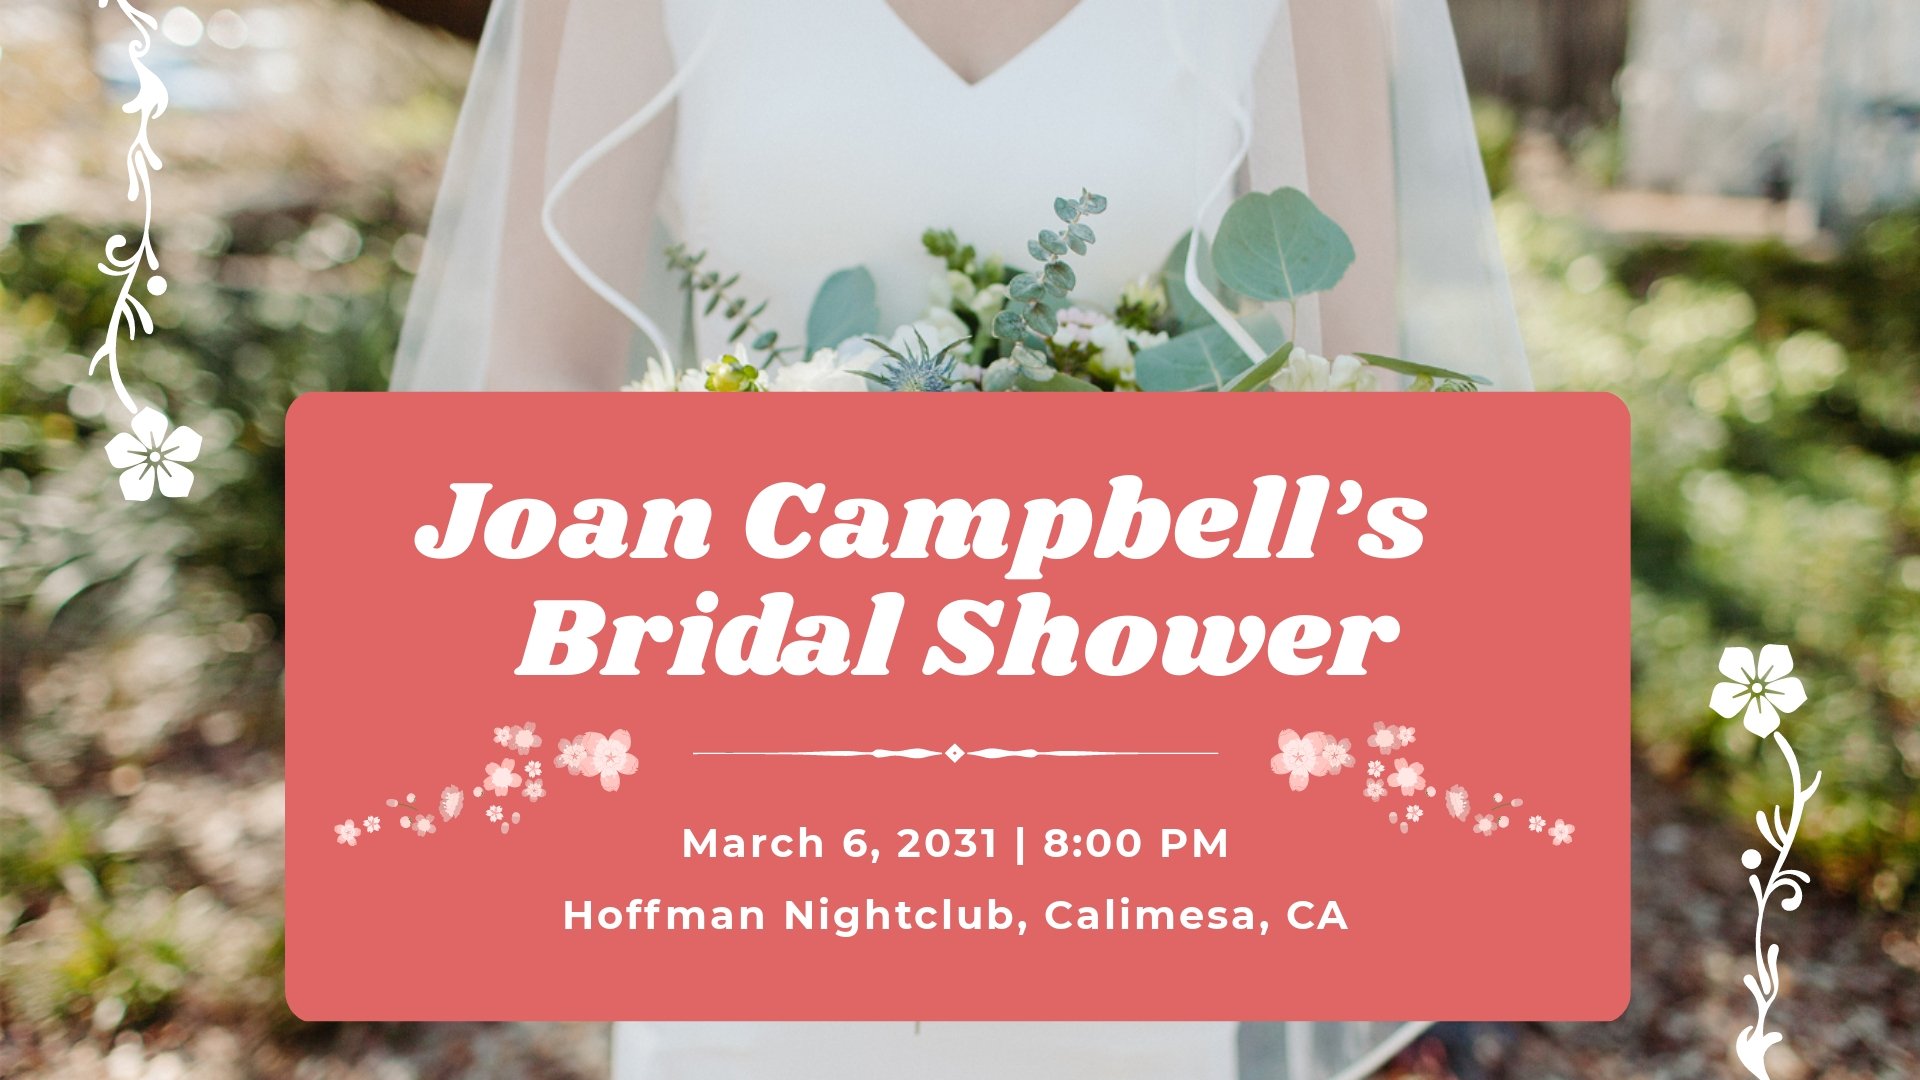 Bridal Shower Facebook Event Cover Template.jpe